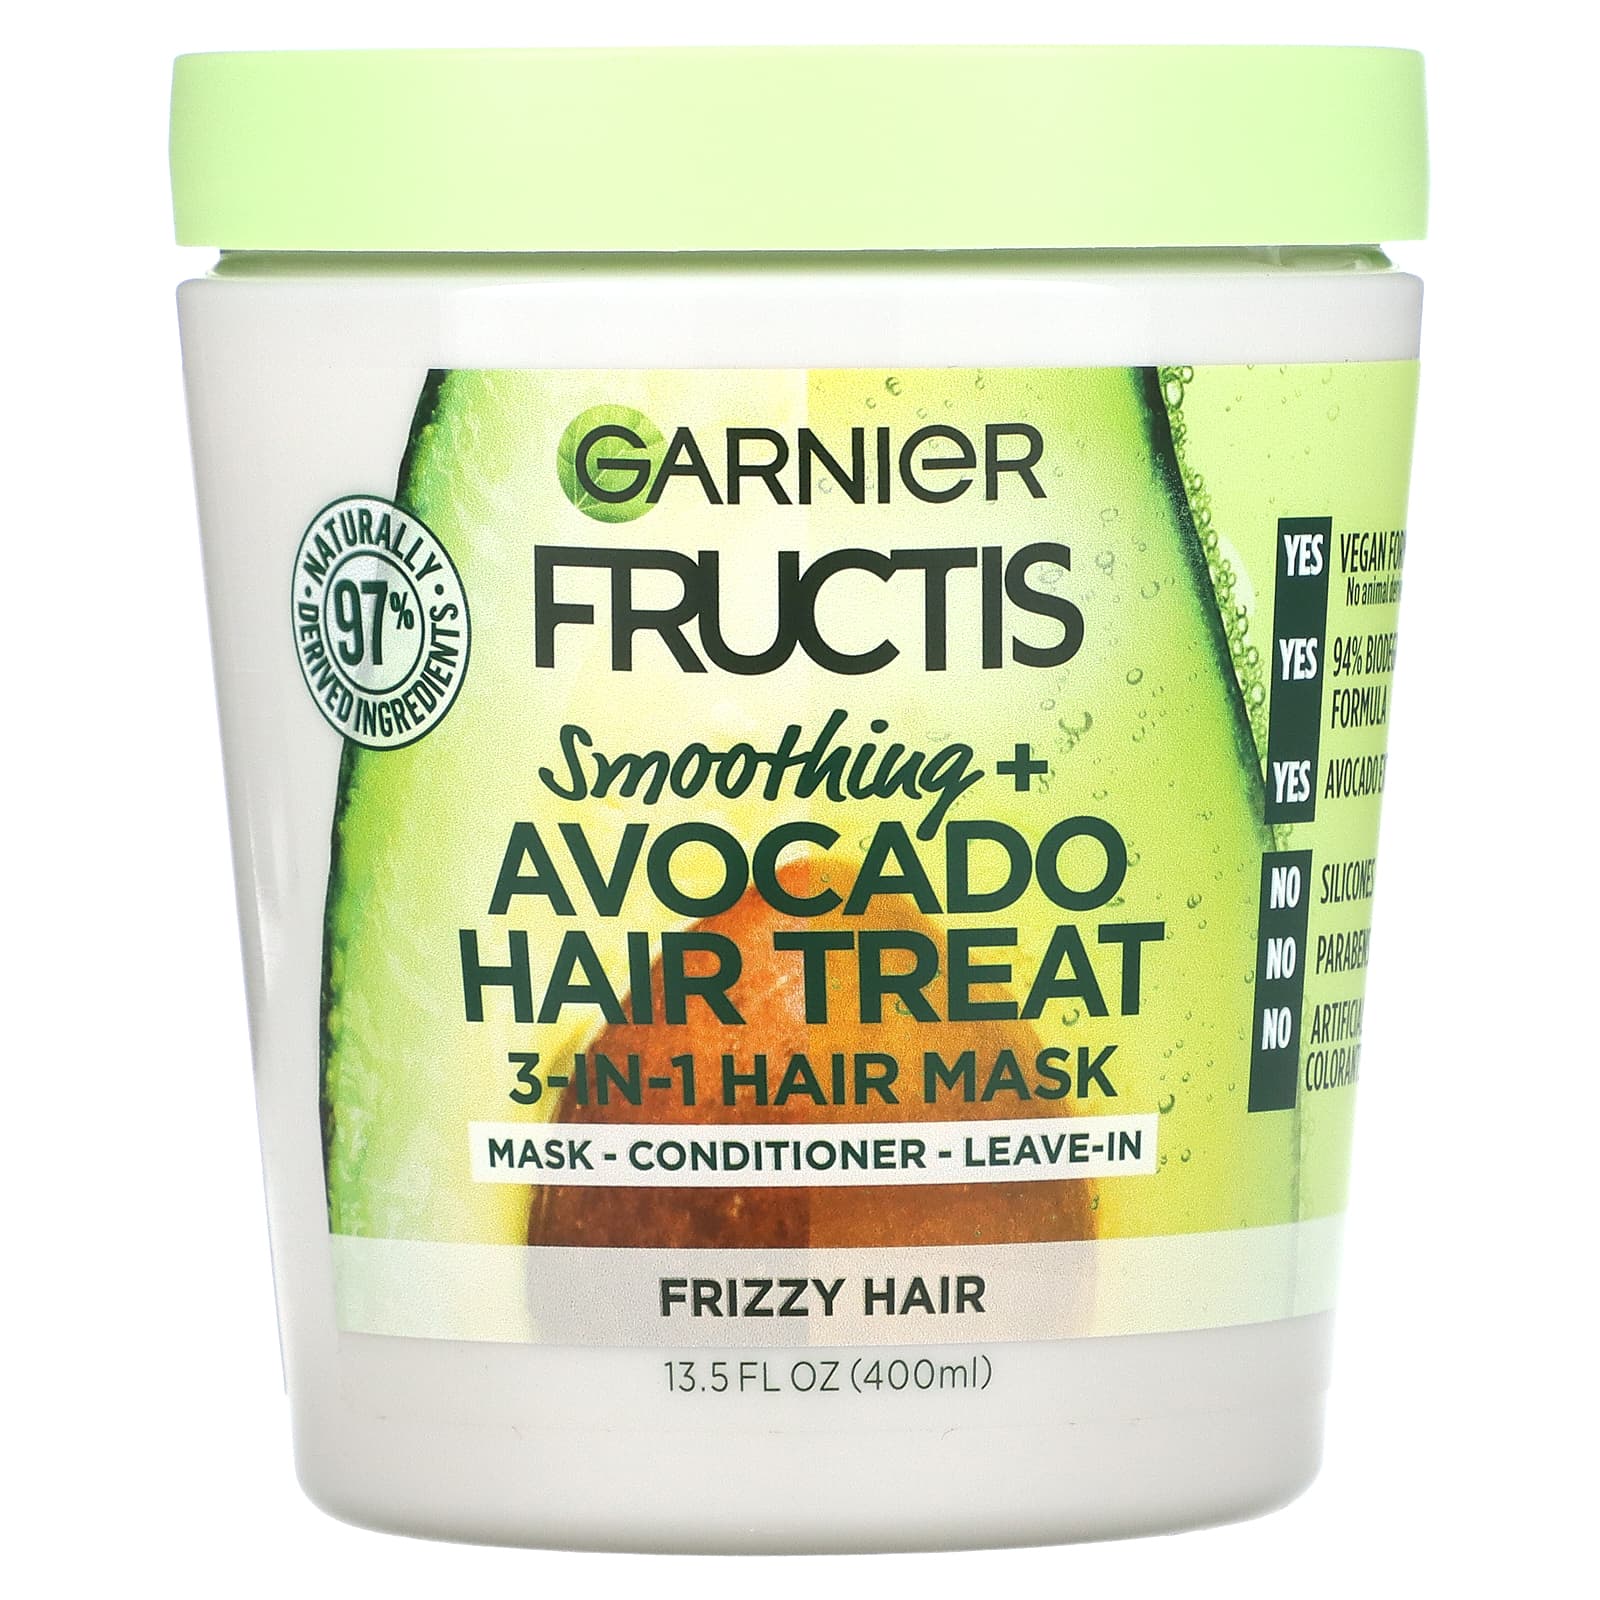 Garnier, Fructis, Smoothing + Avocado Hair Treat, 3-in-1 Hair Mask,  fl  oz (400 ml)